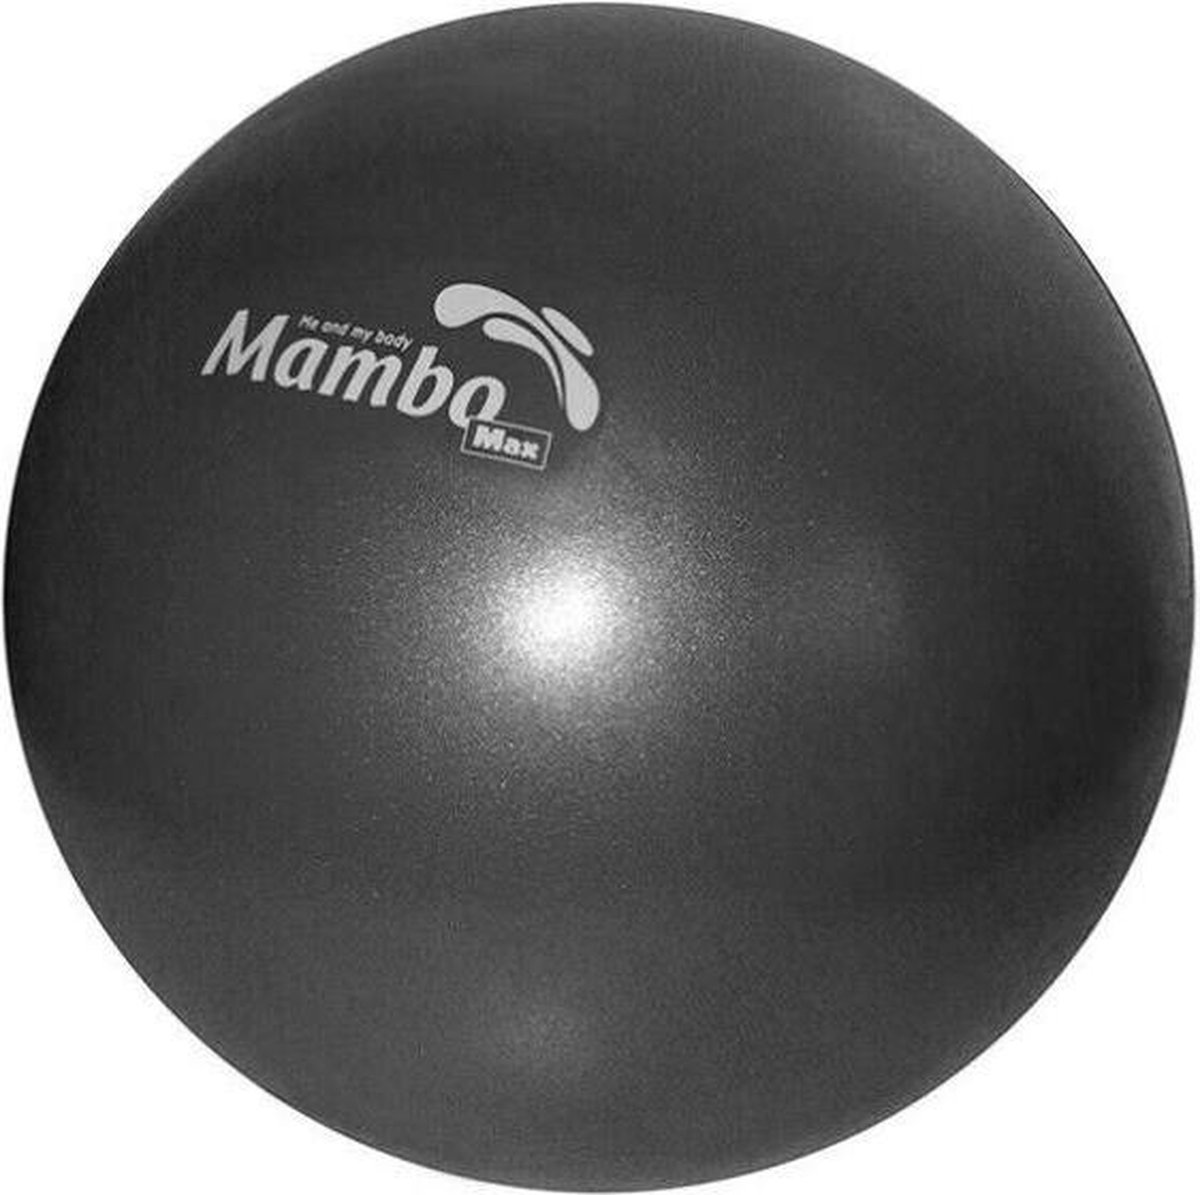 Zachte Ballonbal: 17-19 cm - zwart- Mambo Max